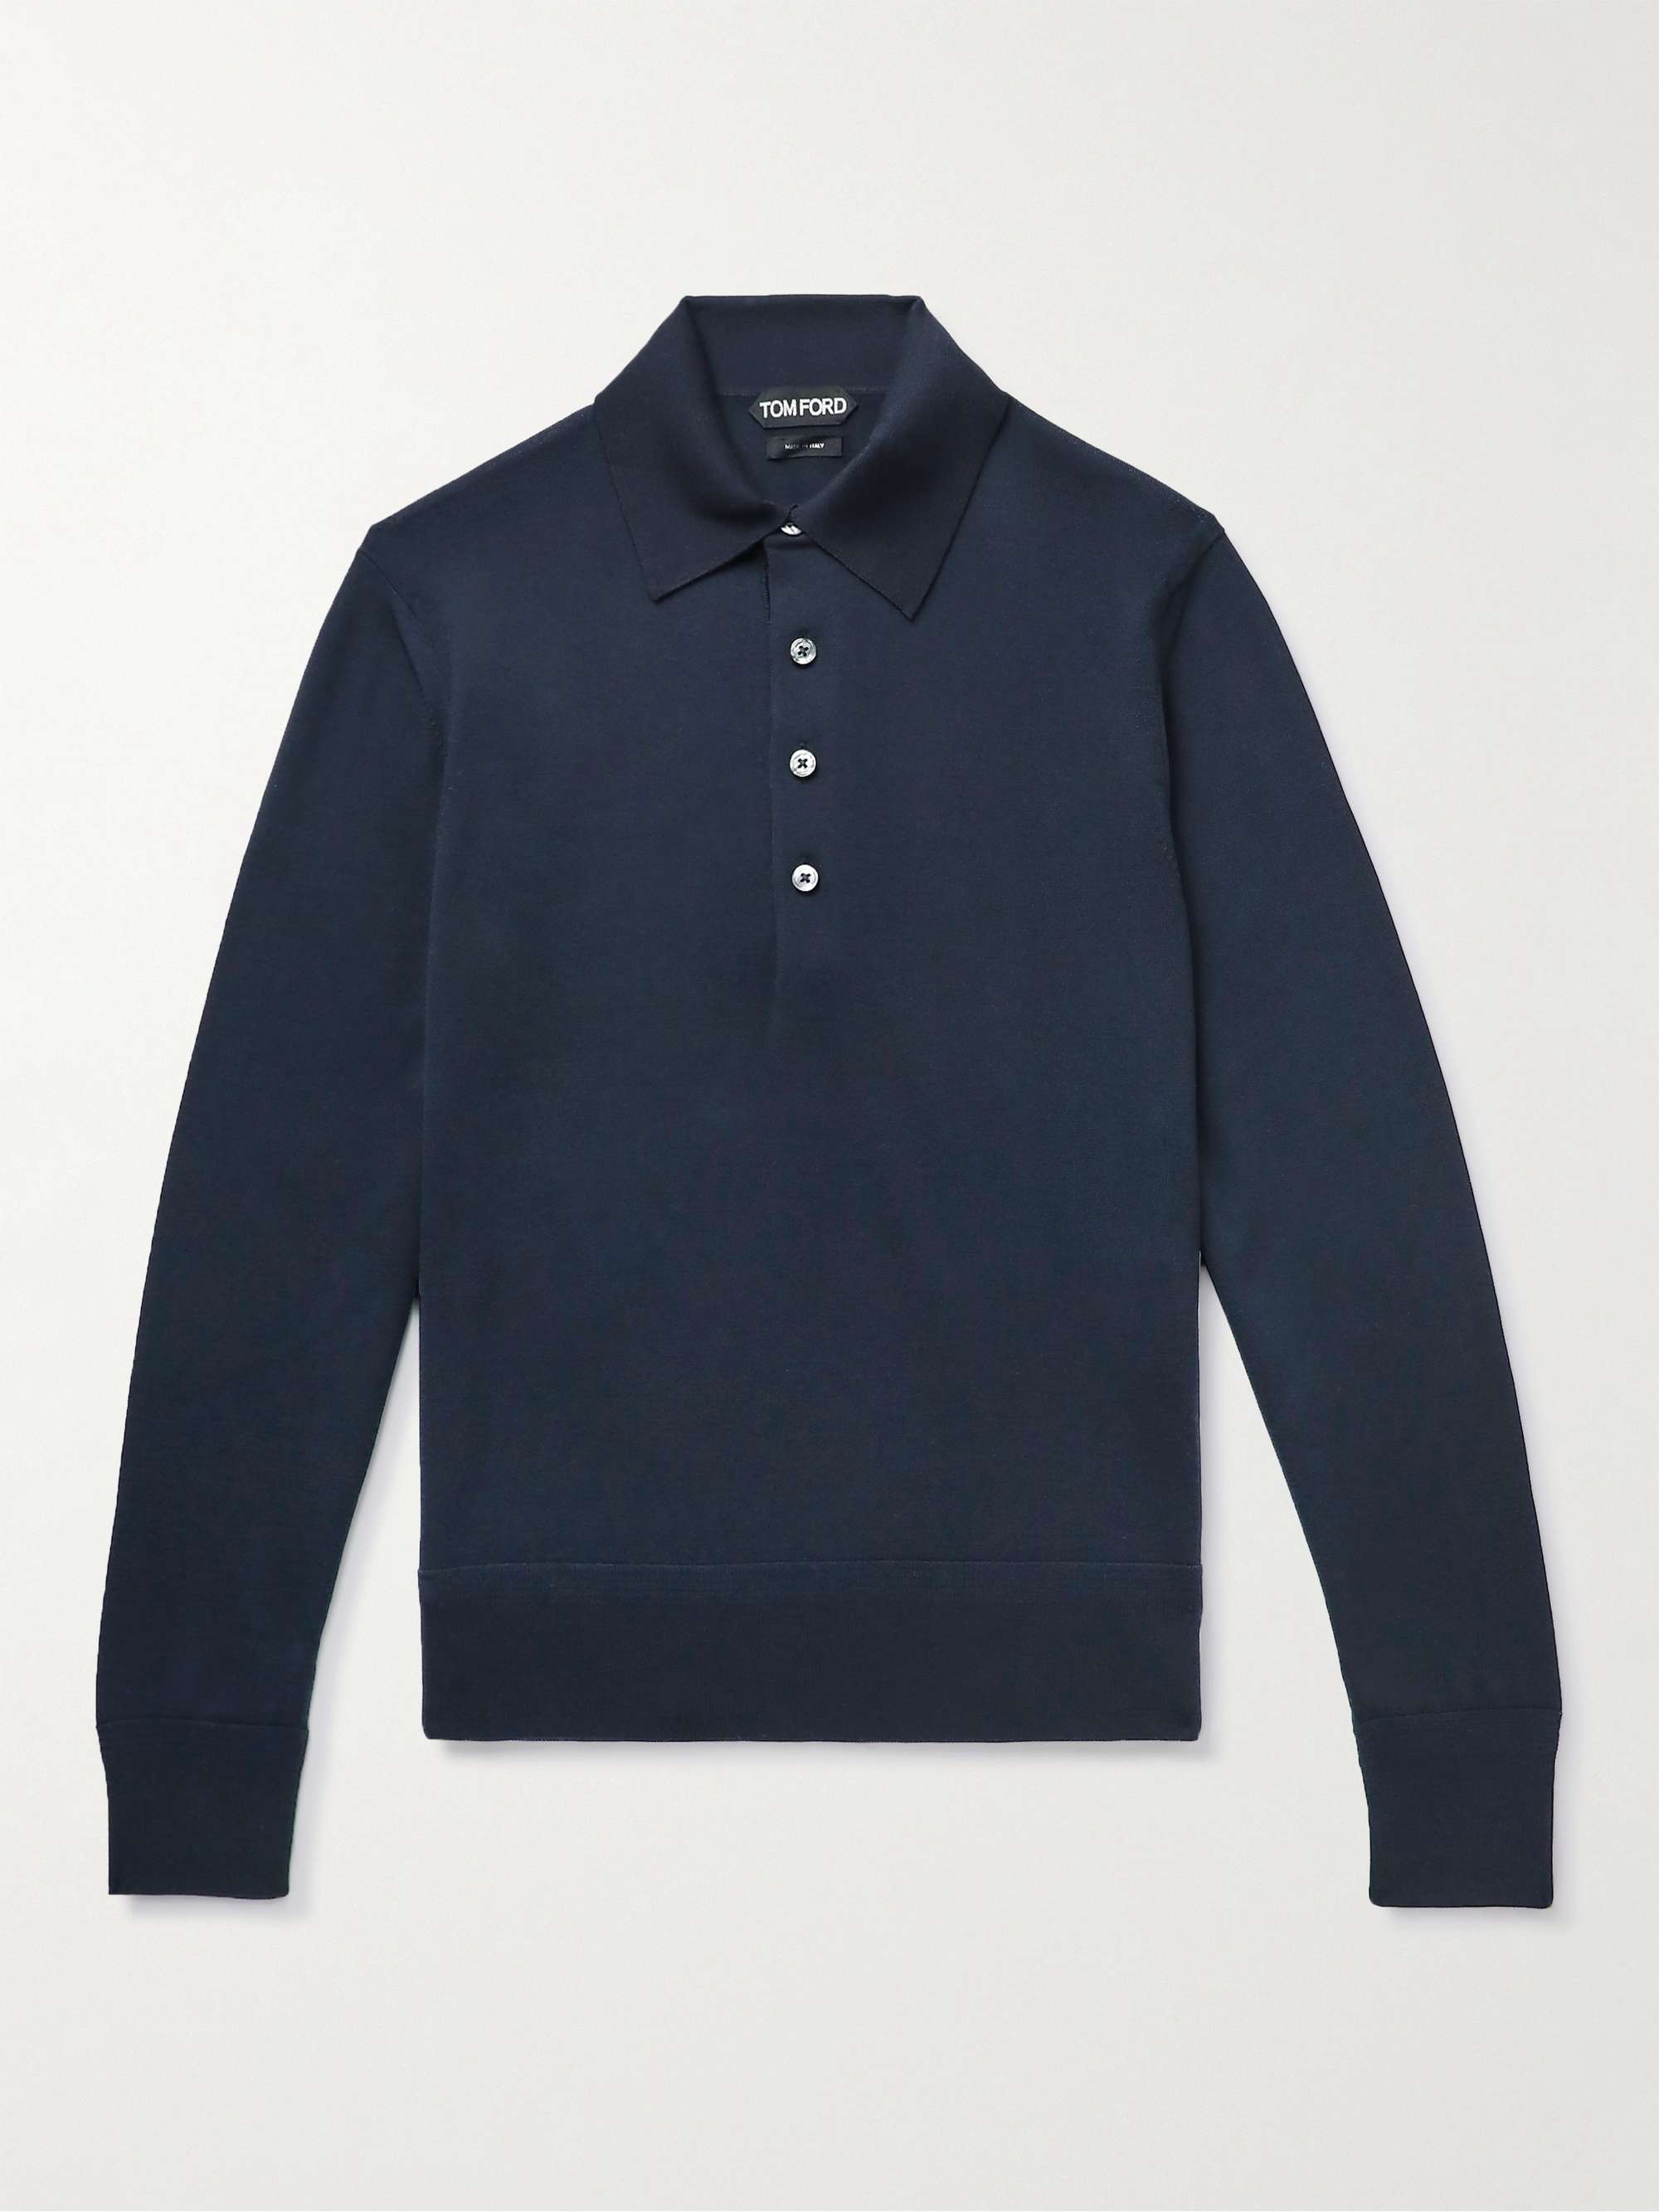 TOM FORD Merino Wool Polo Shirt | MR PORTER